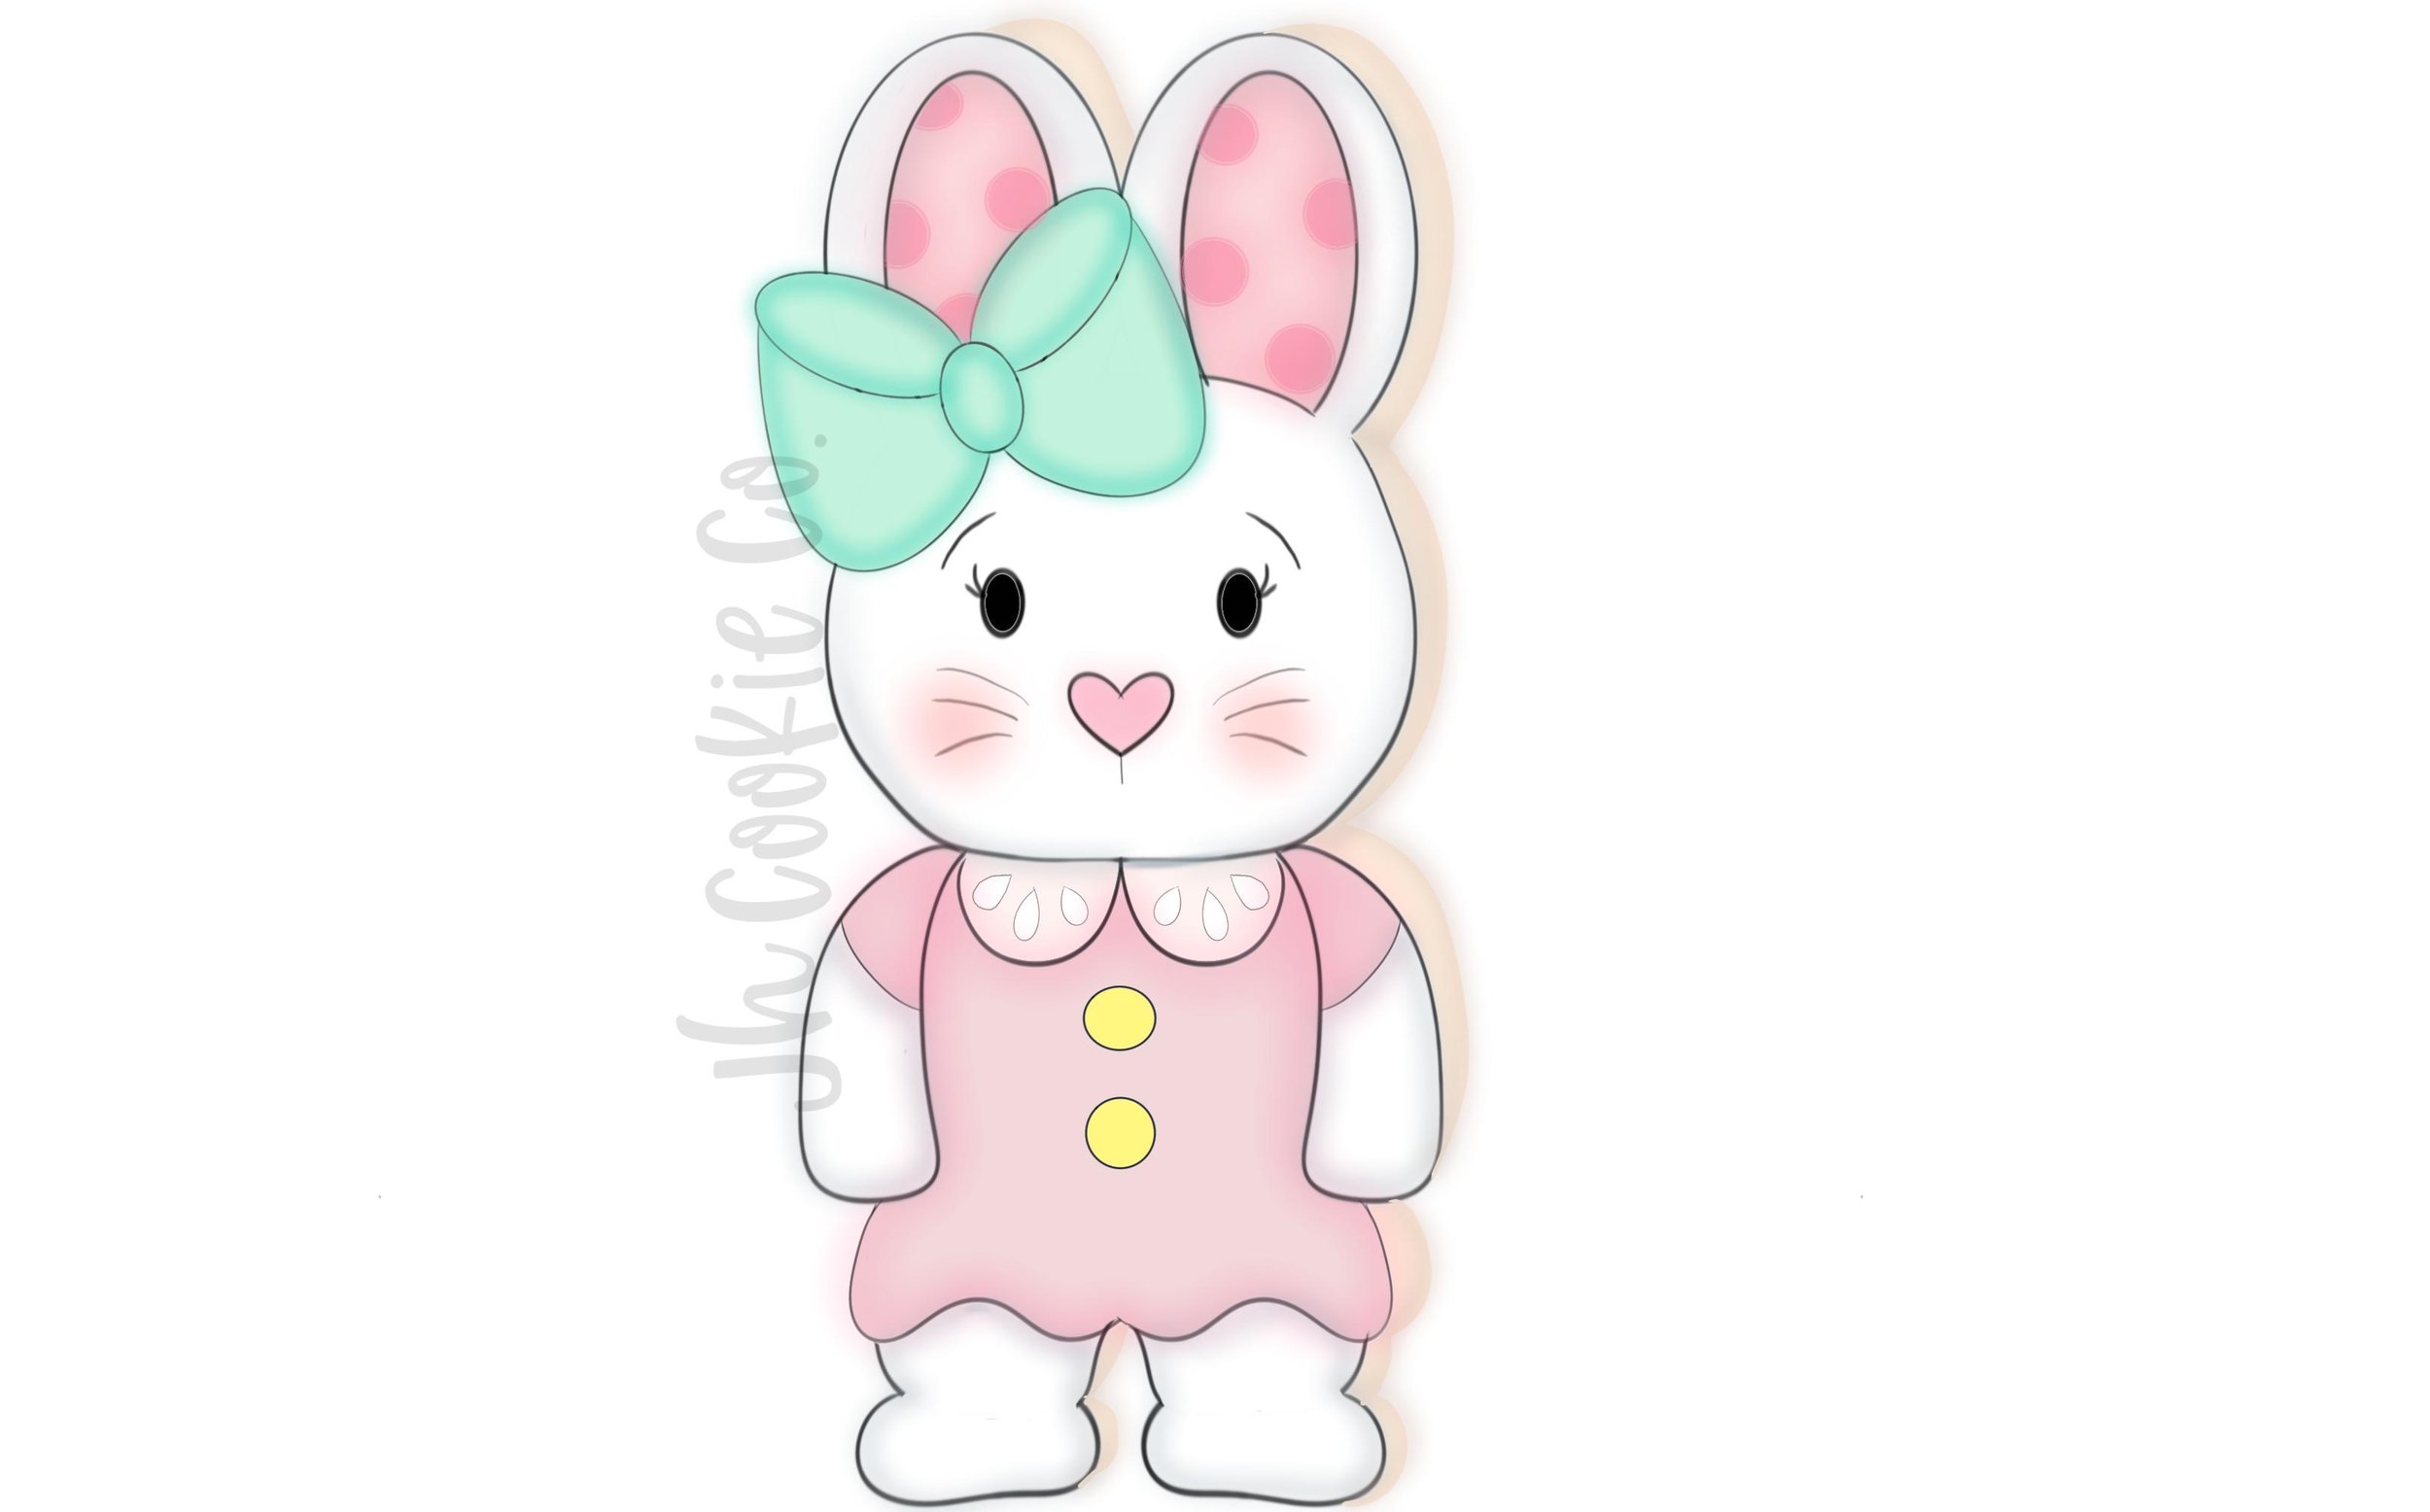 Bunny chloe the Chloe Moriondo